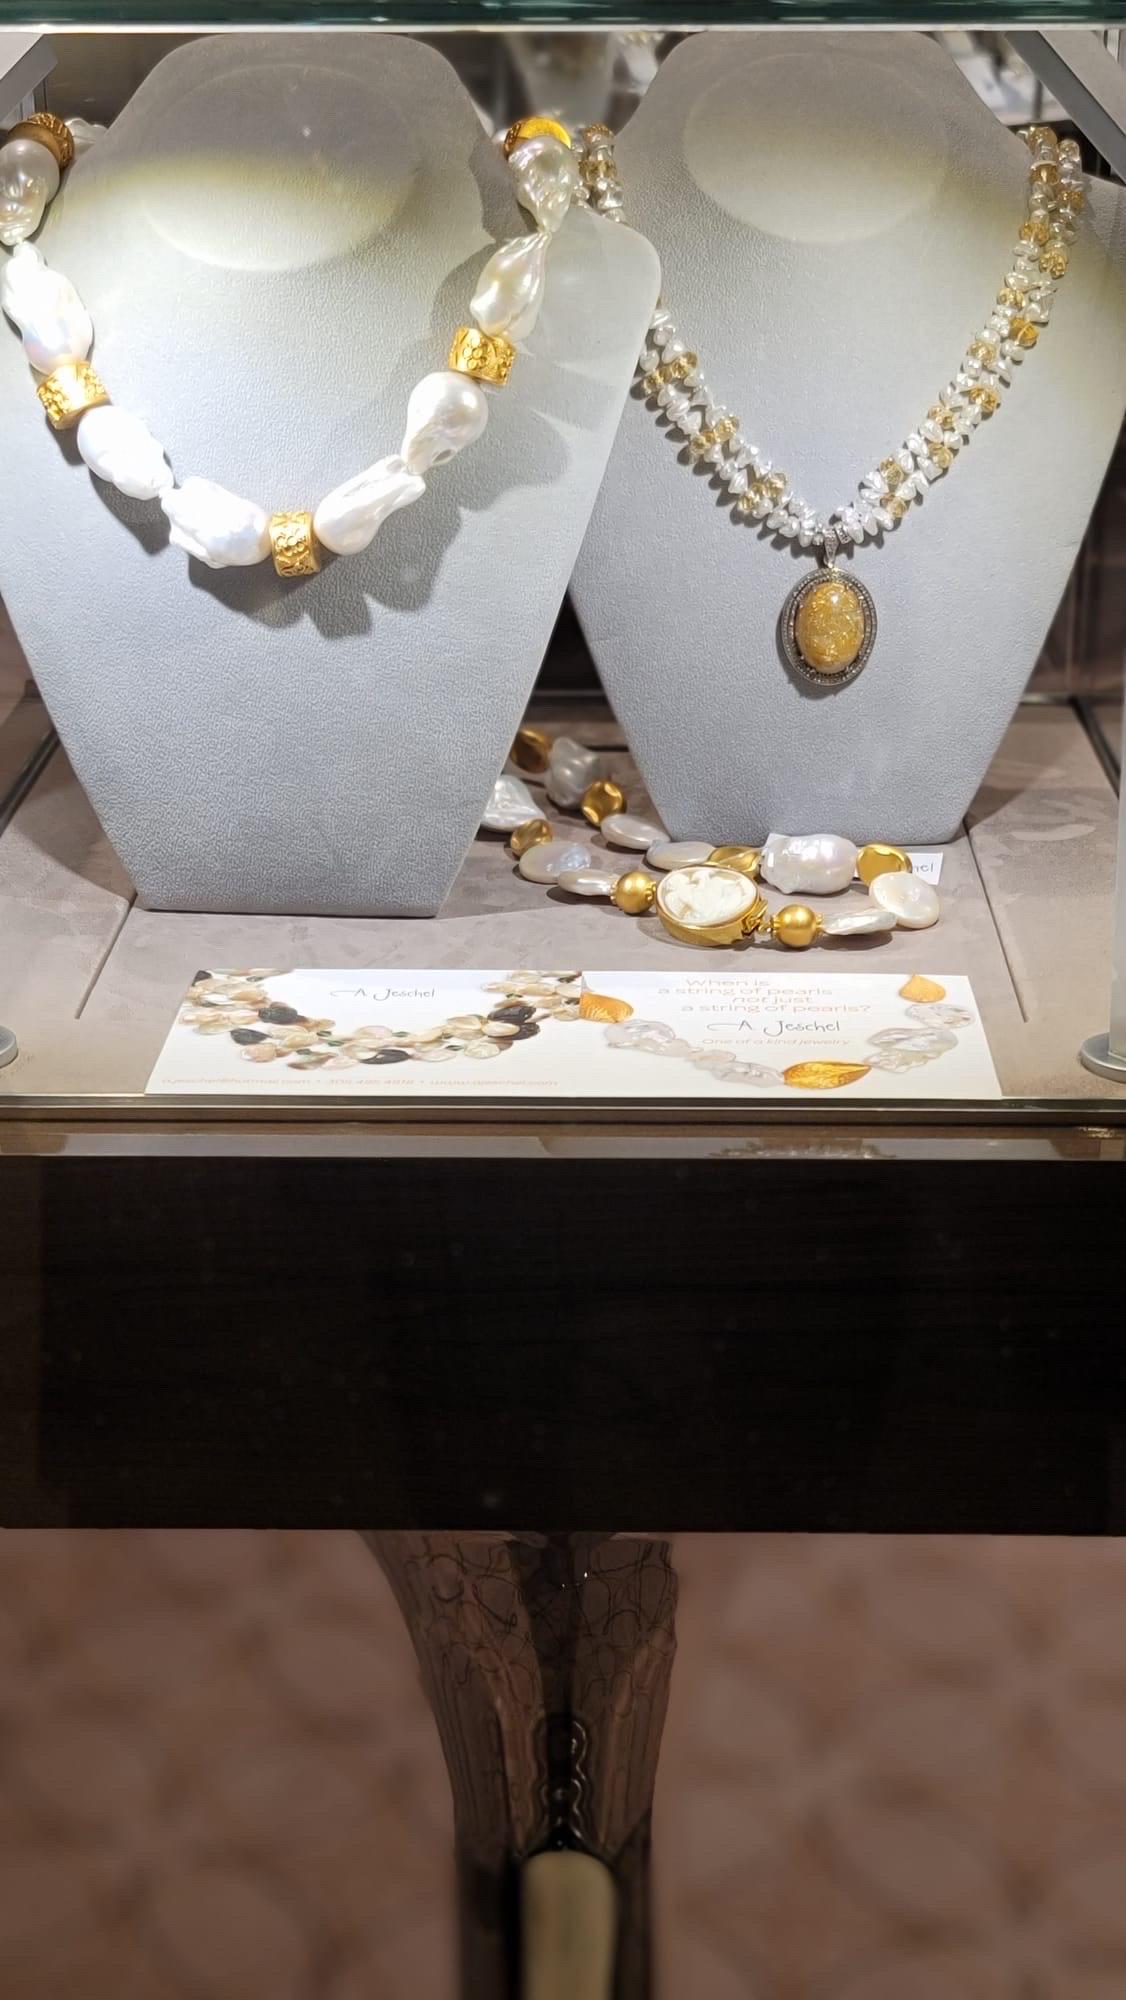 A.Jeschel Colossal Baroque Pearl Necklace In New Condition For Sale In Miami, FL